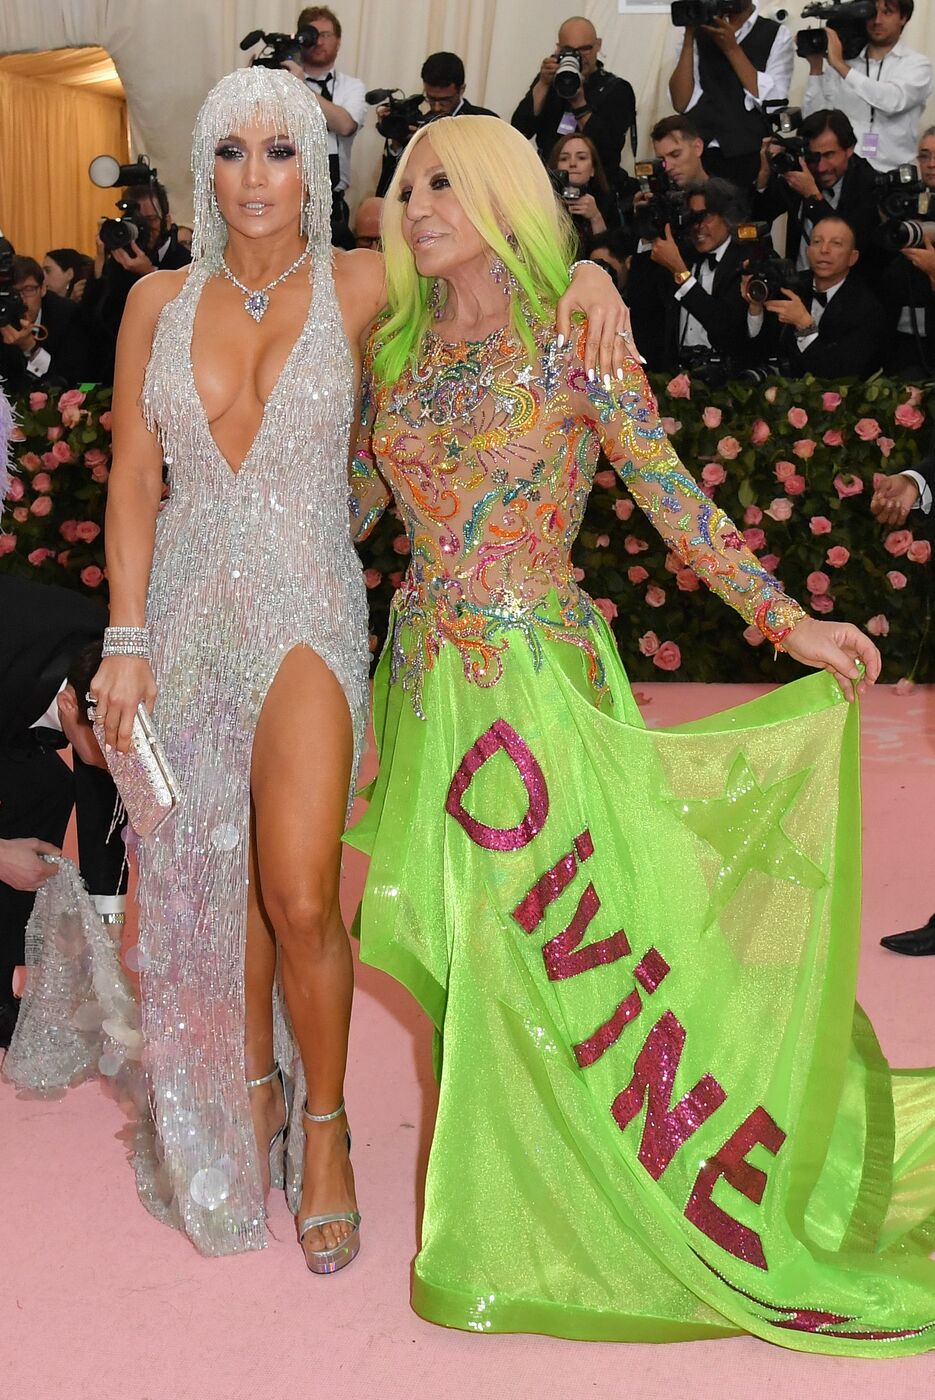 Singer/songwriter Jennifer Lopez (L) and designer Donatella Versace (R) arrive for the 2019 Met Gala